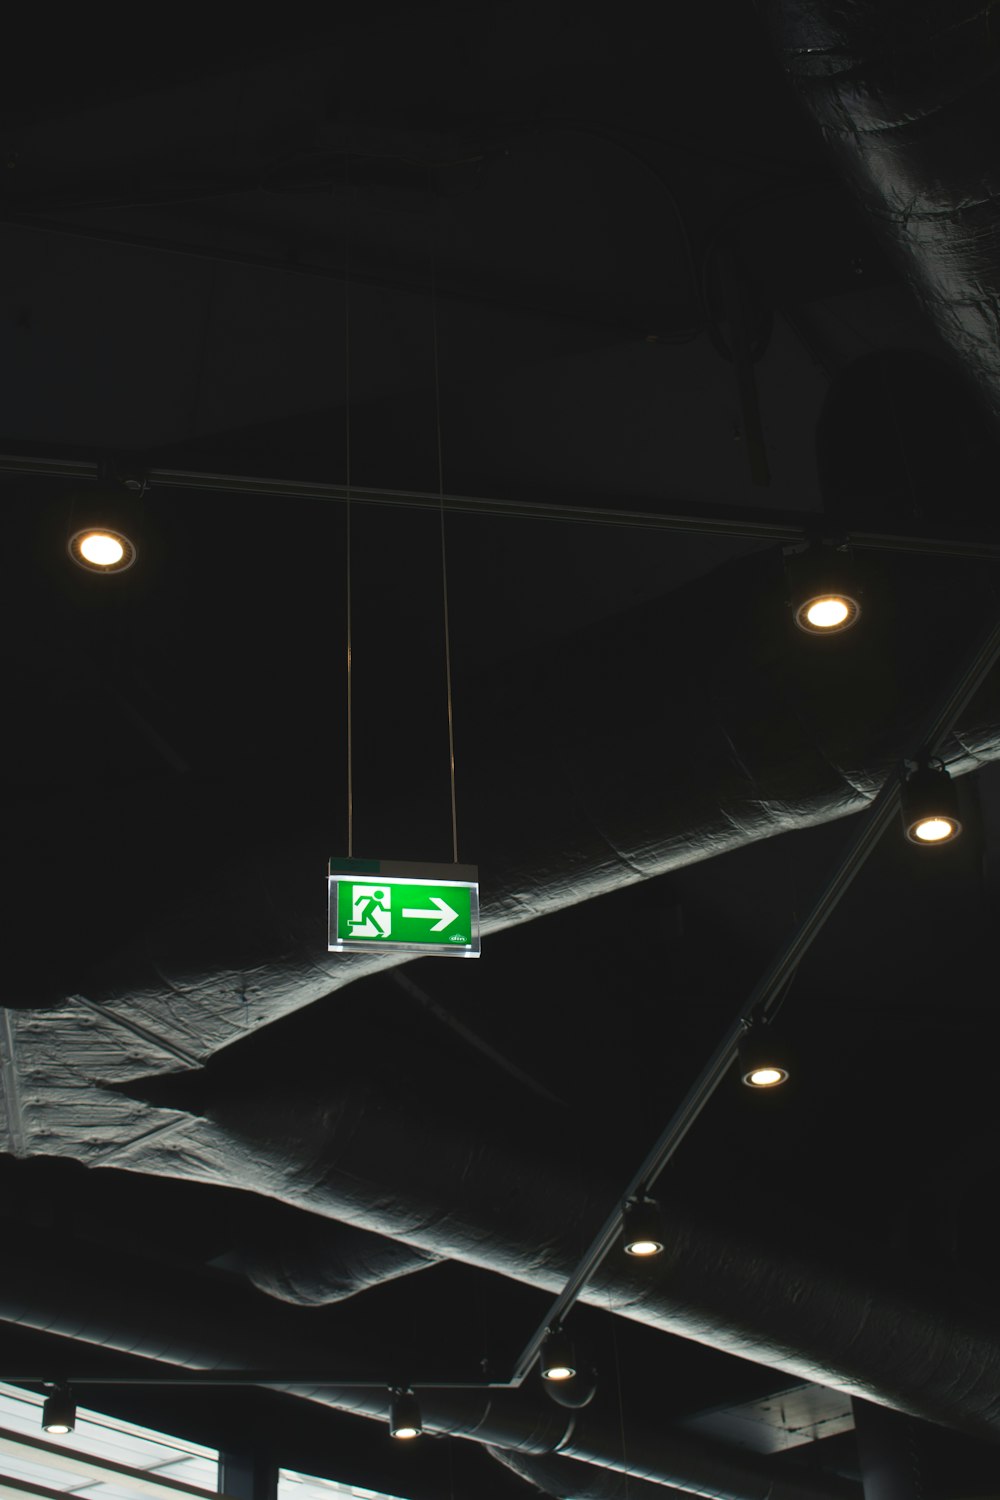 Signalisation verte au plafond